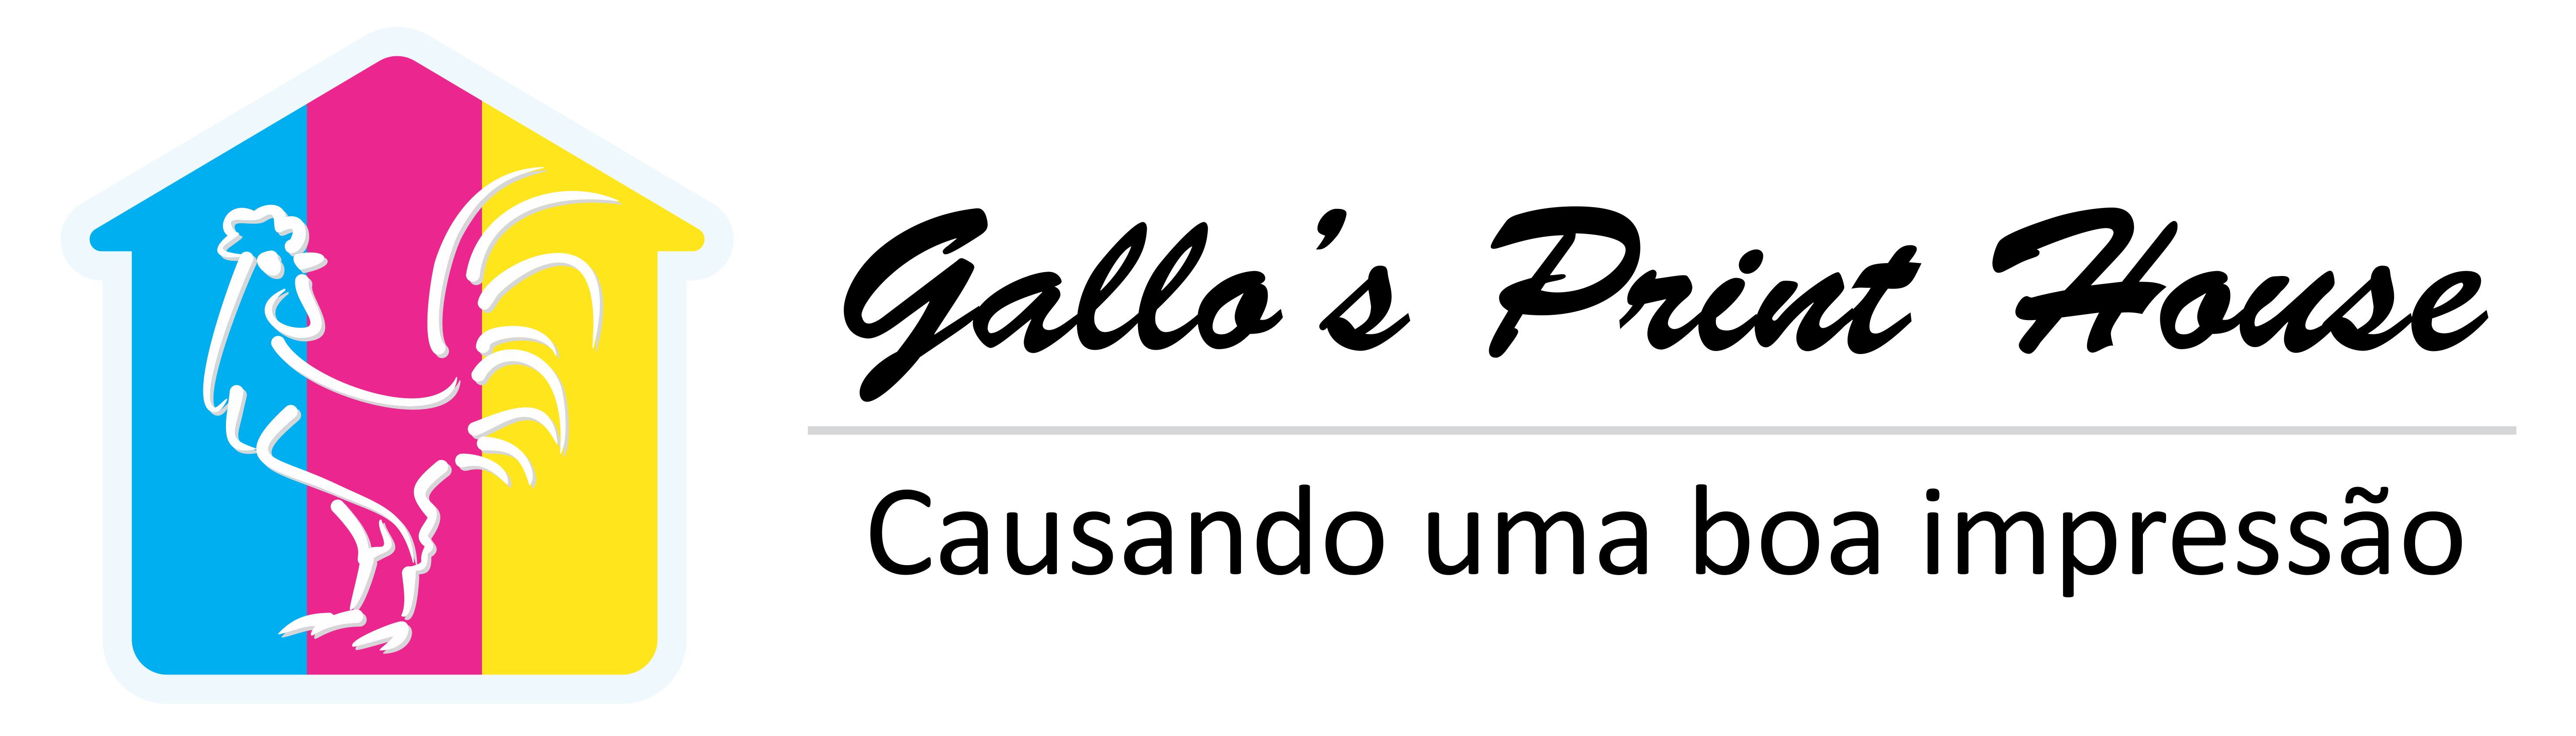 Gallo's Print House